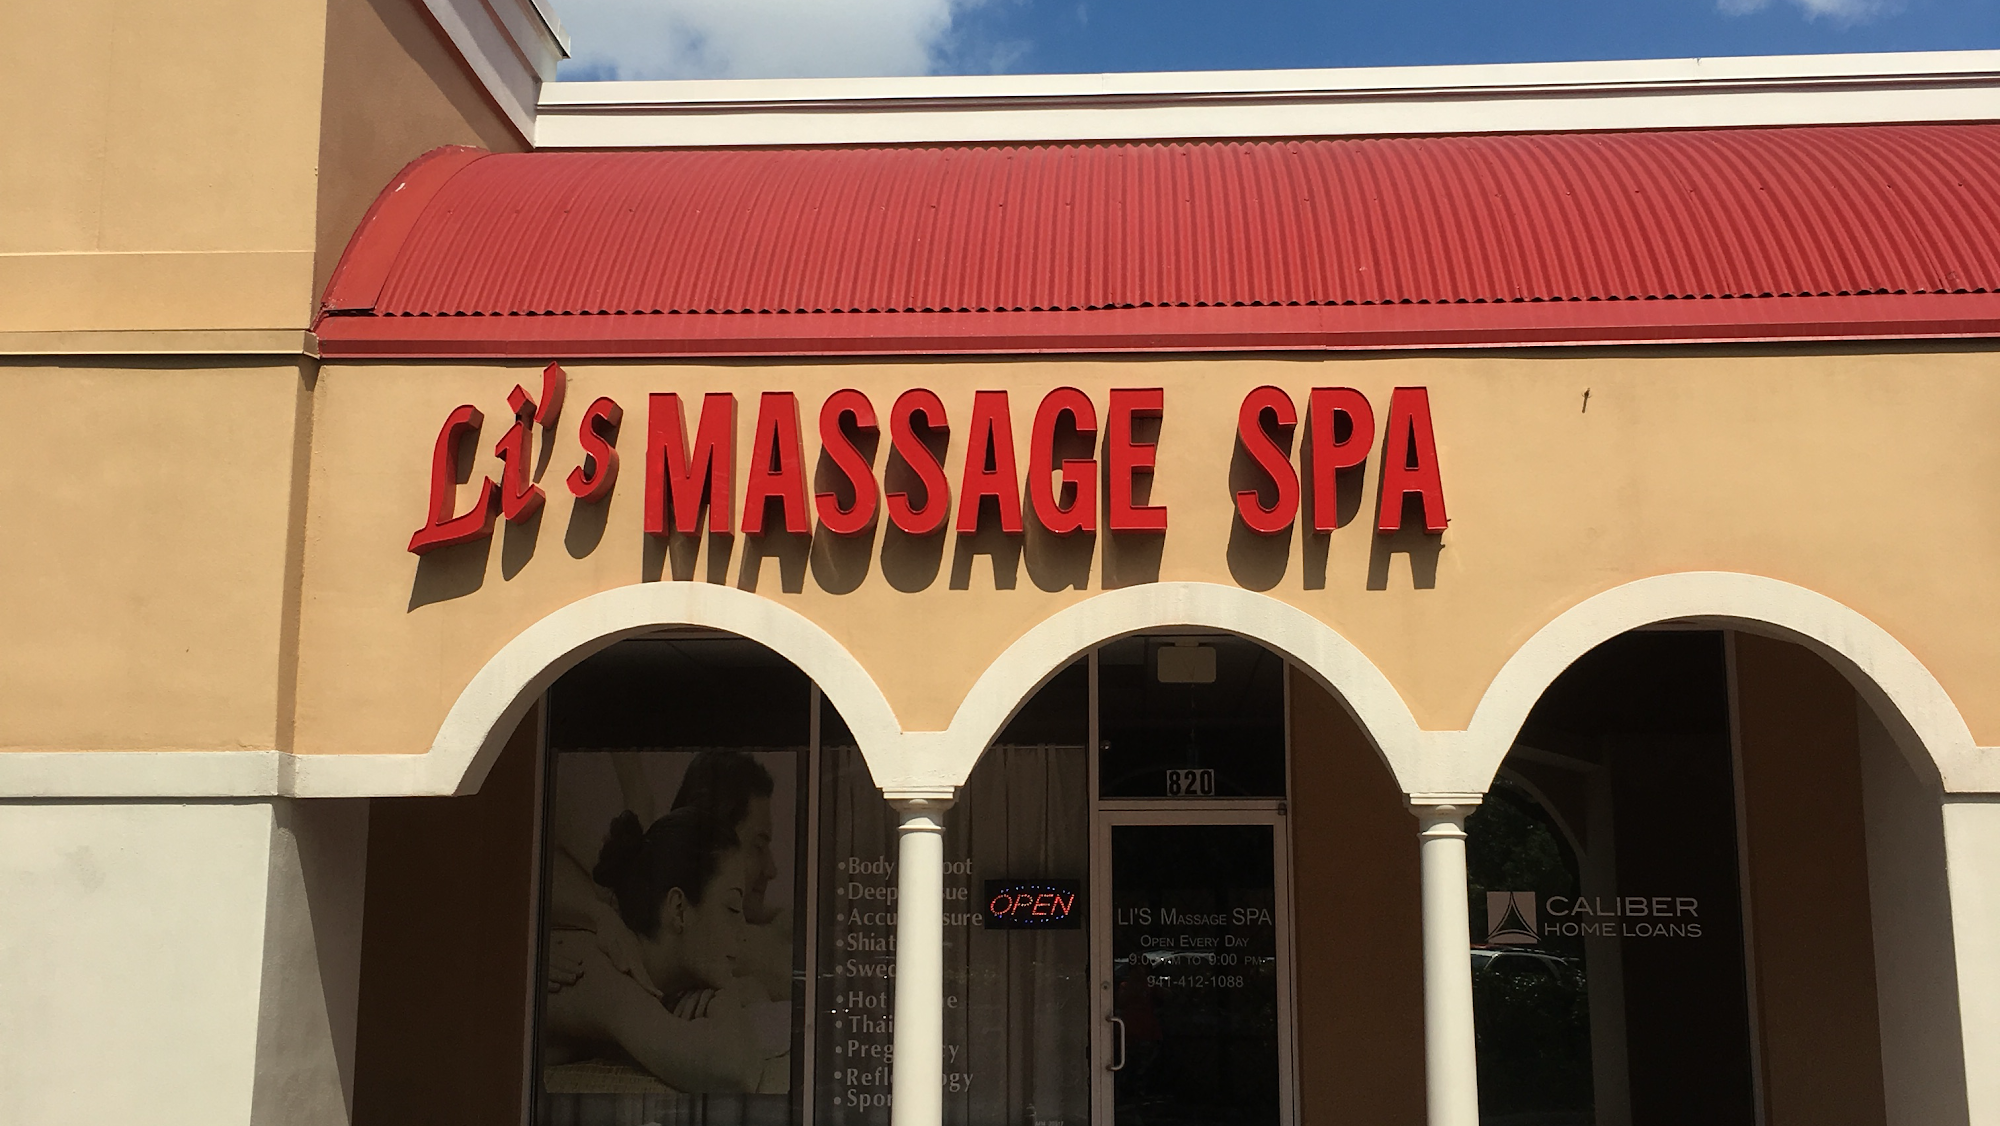 Li's Massage Spa